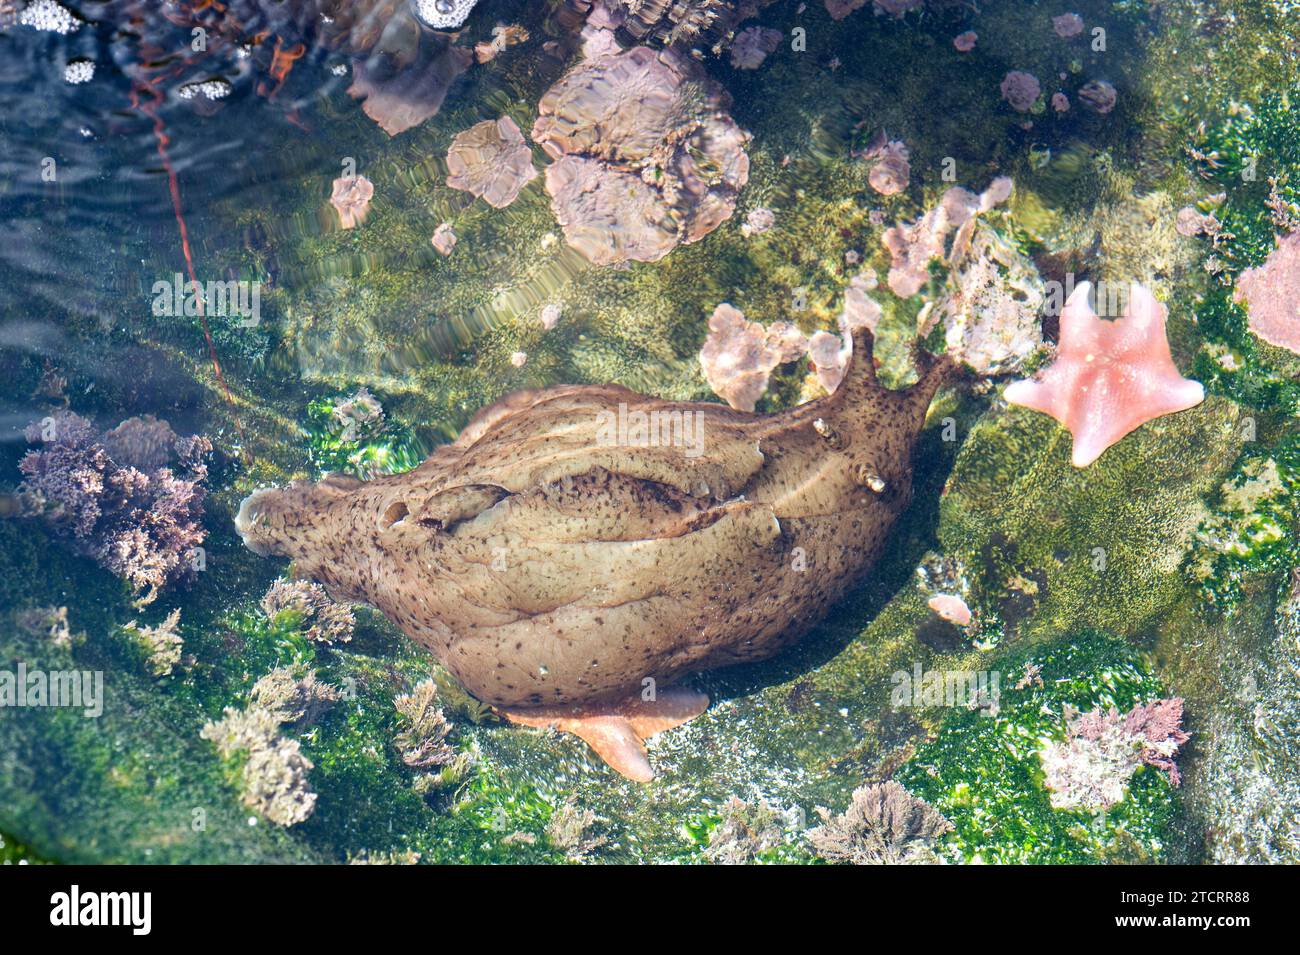 California sea hare (Aplysia californica) is a sea slug. This photo was taken in San Diego, California, USA. Stock Photo